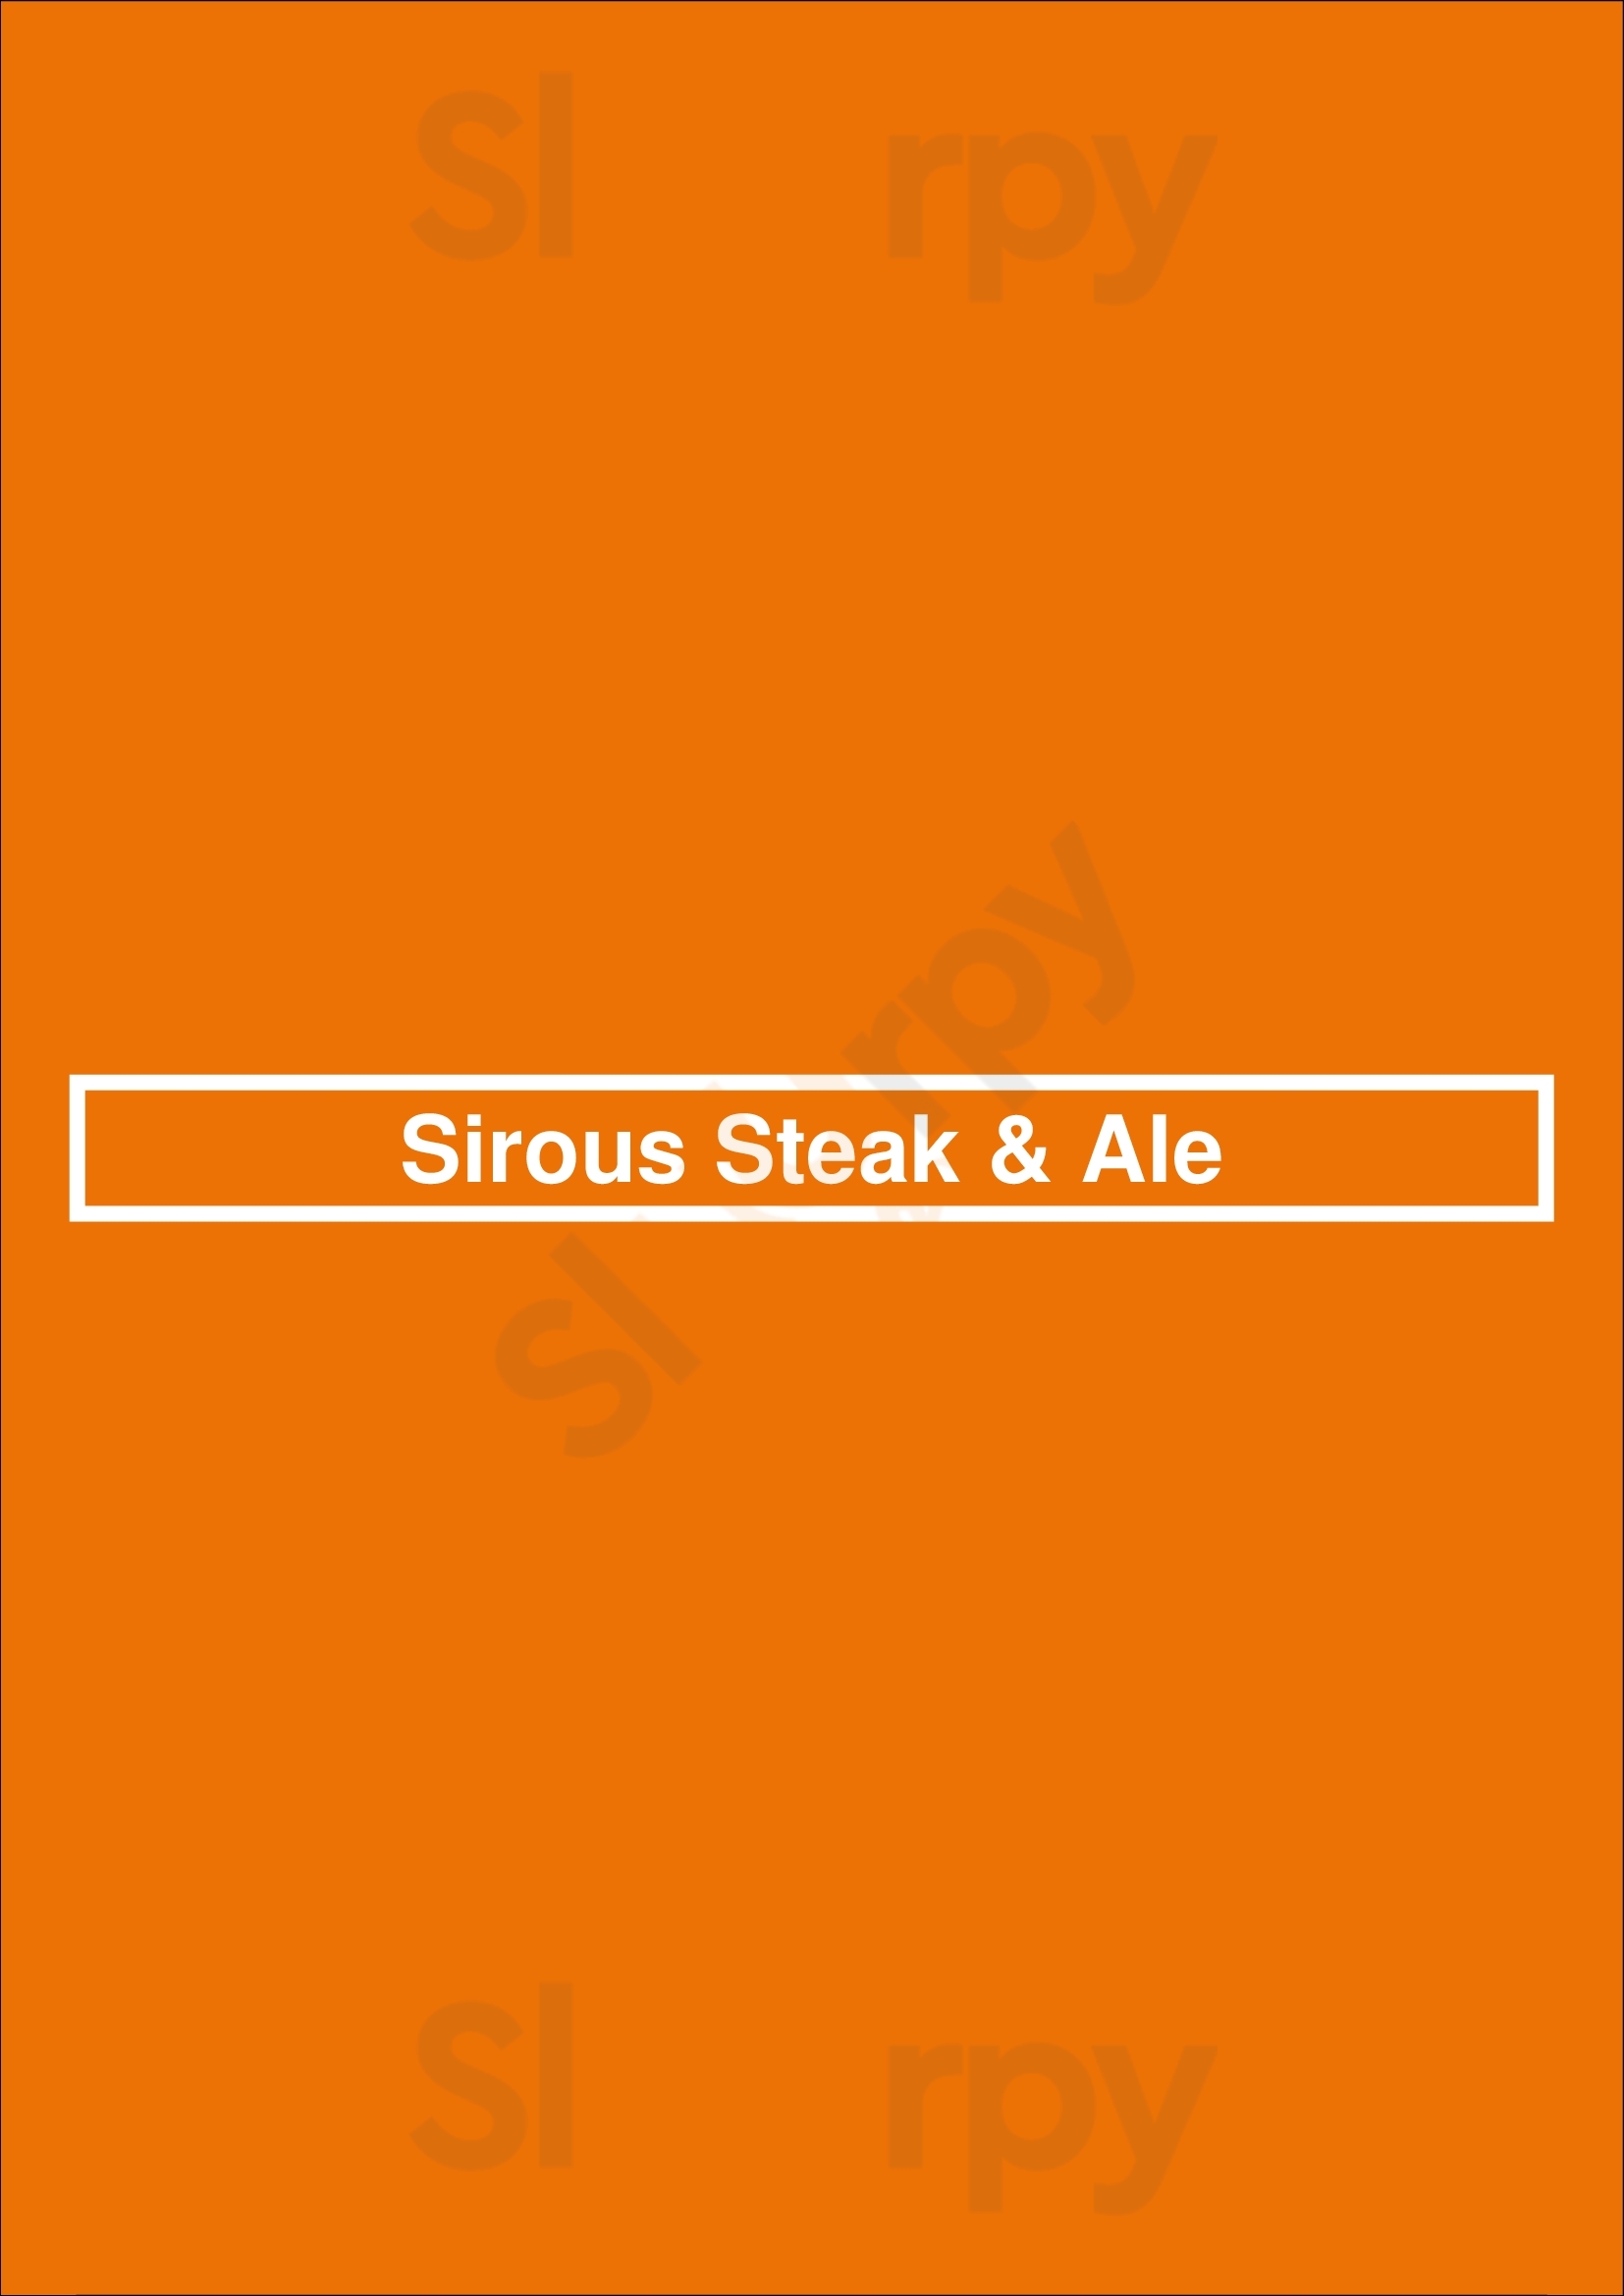 Sirous Steak & Ale London Menu - 1